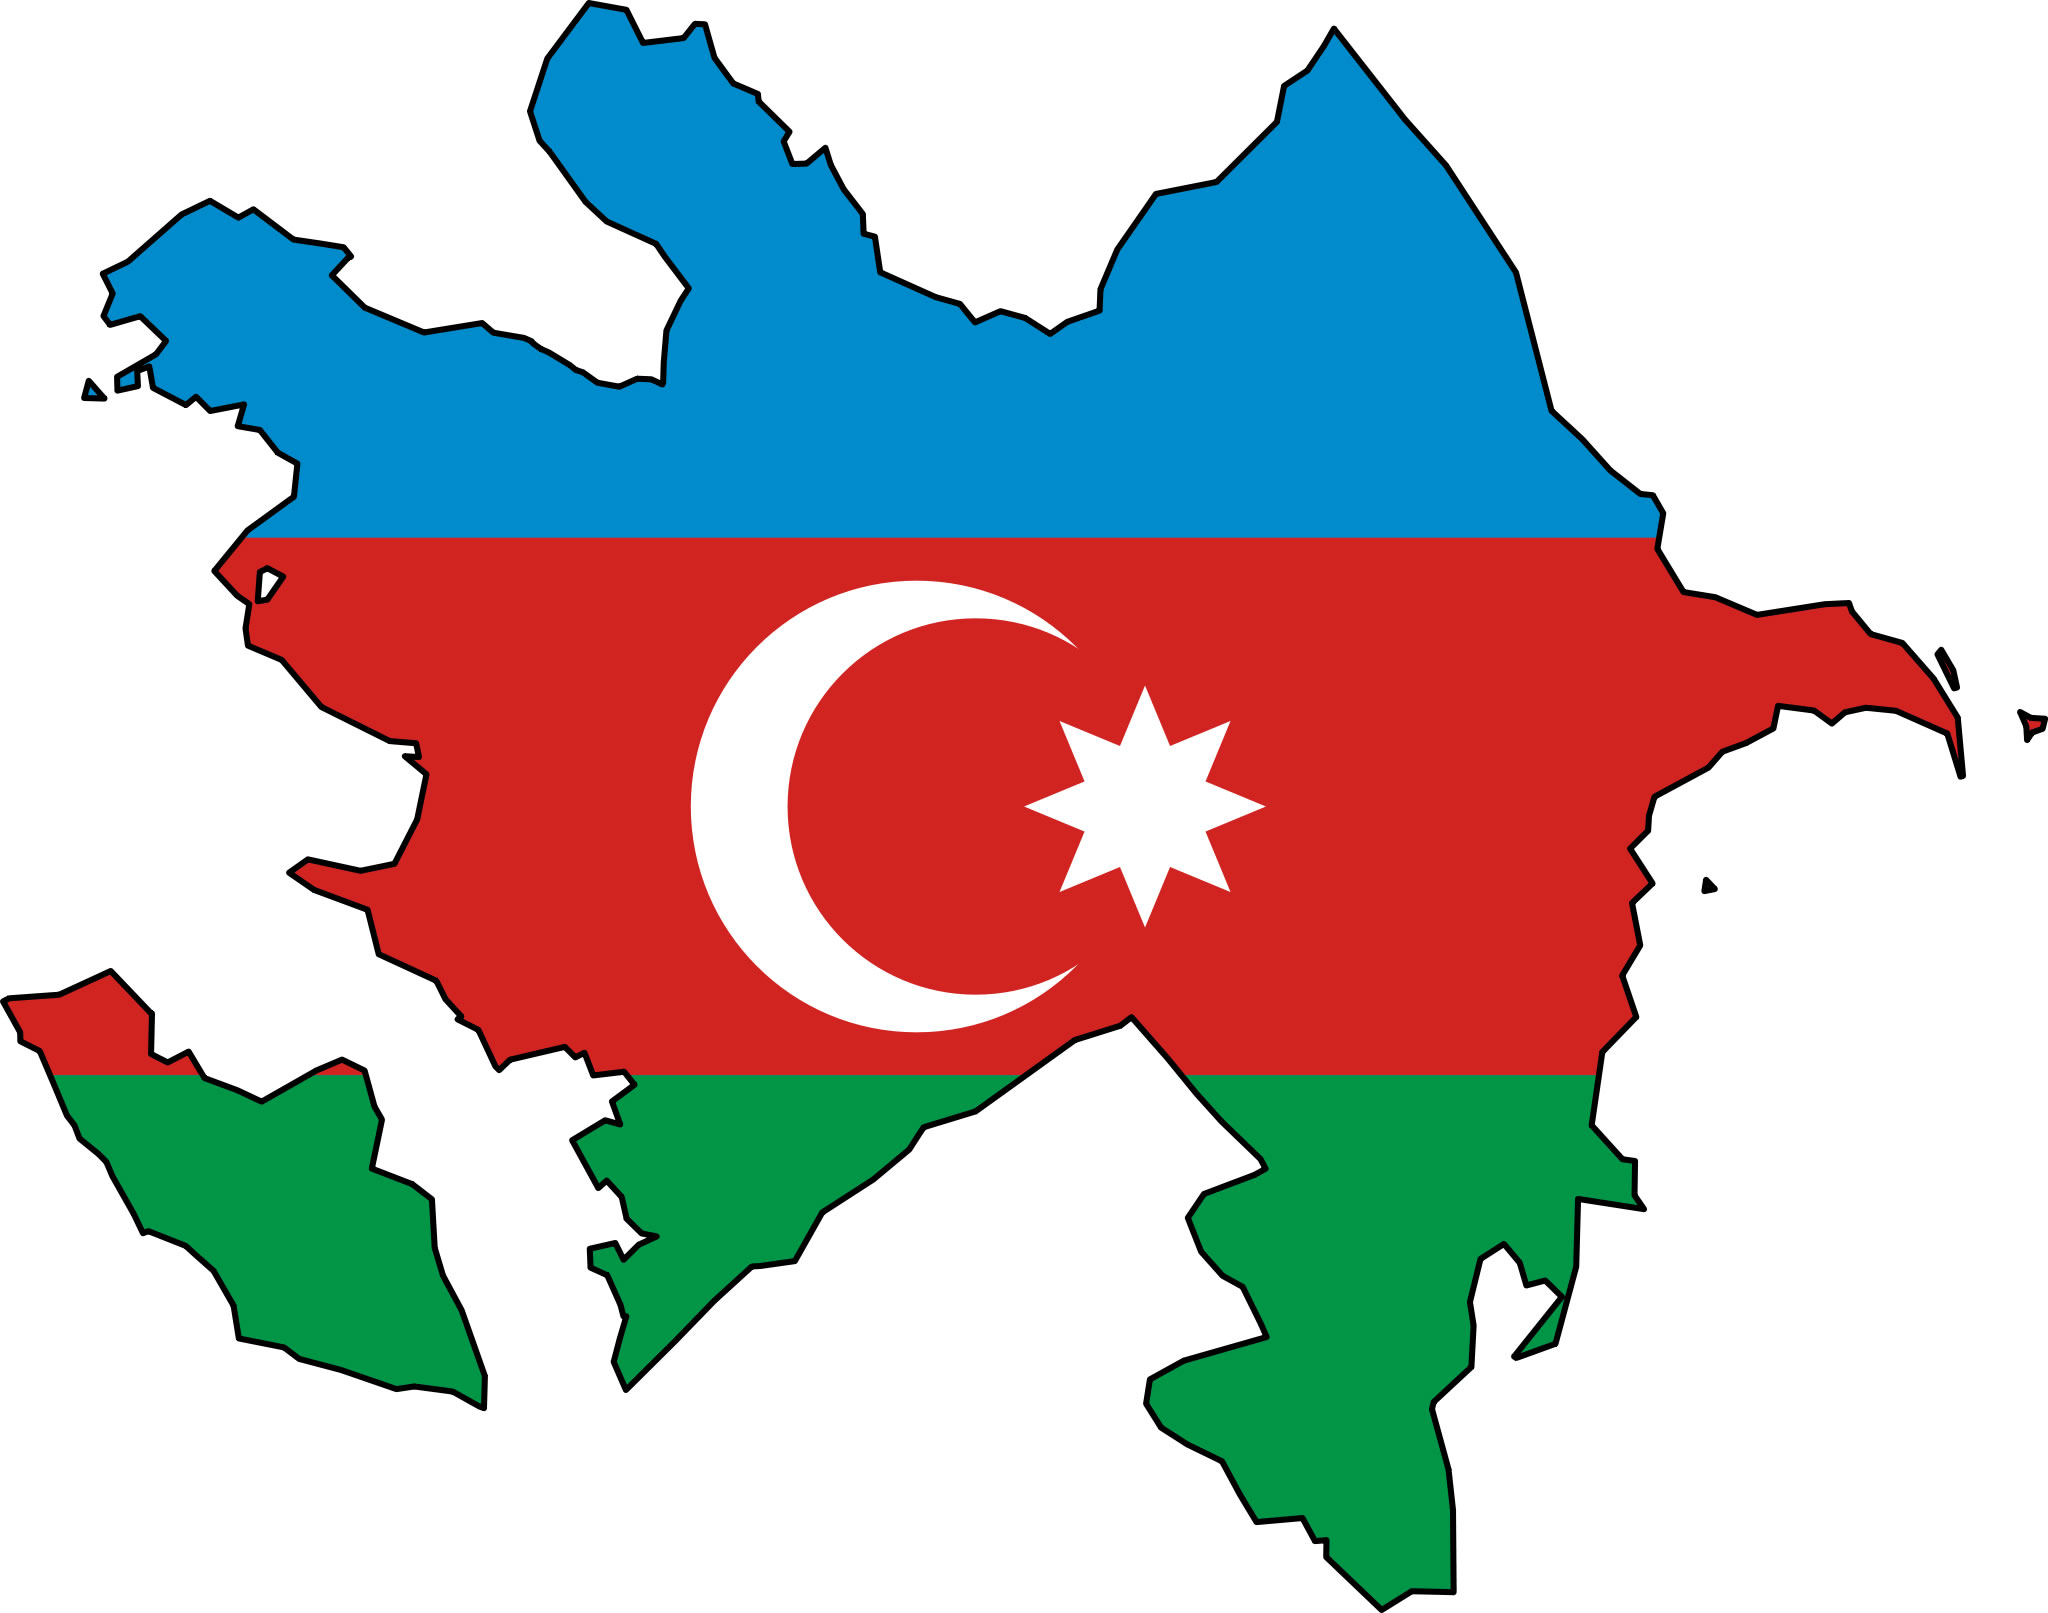 azerbaidjan drapeau